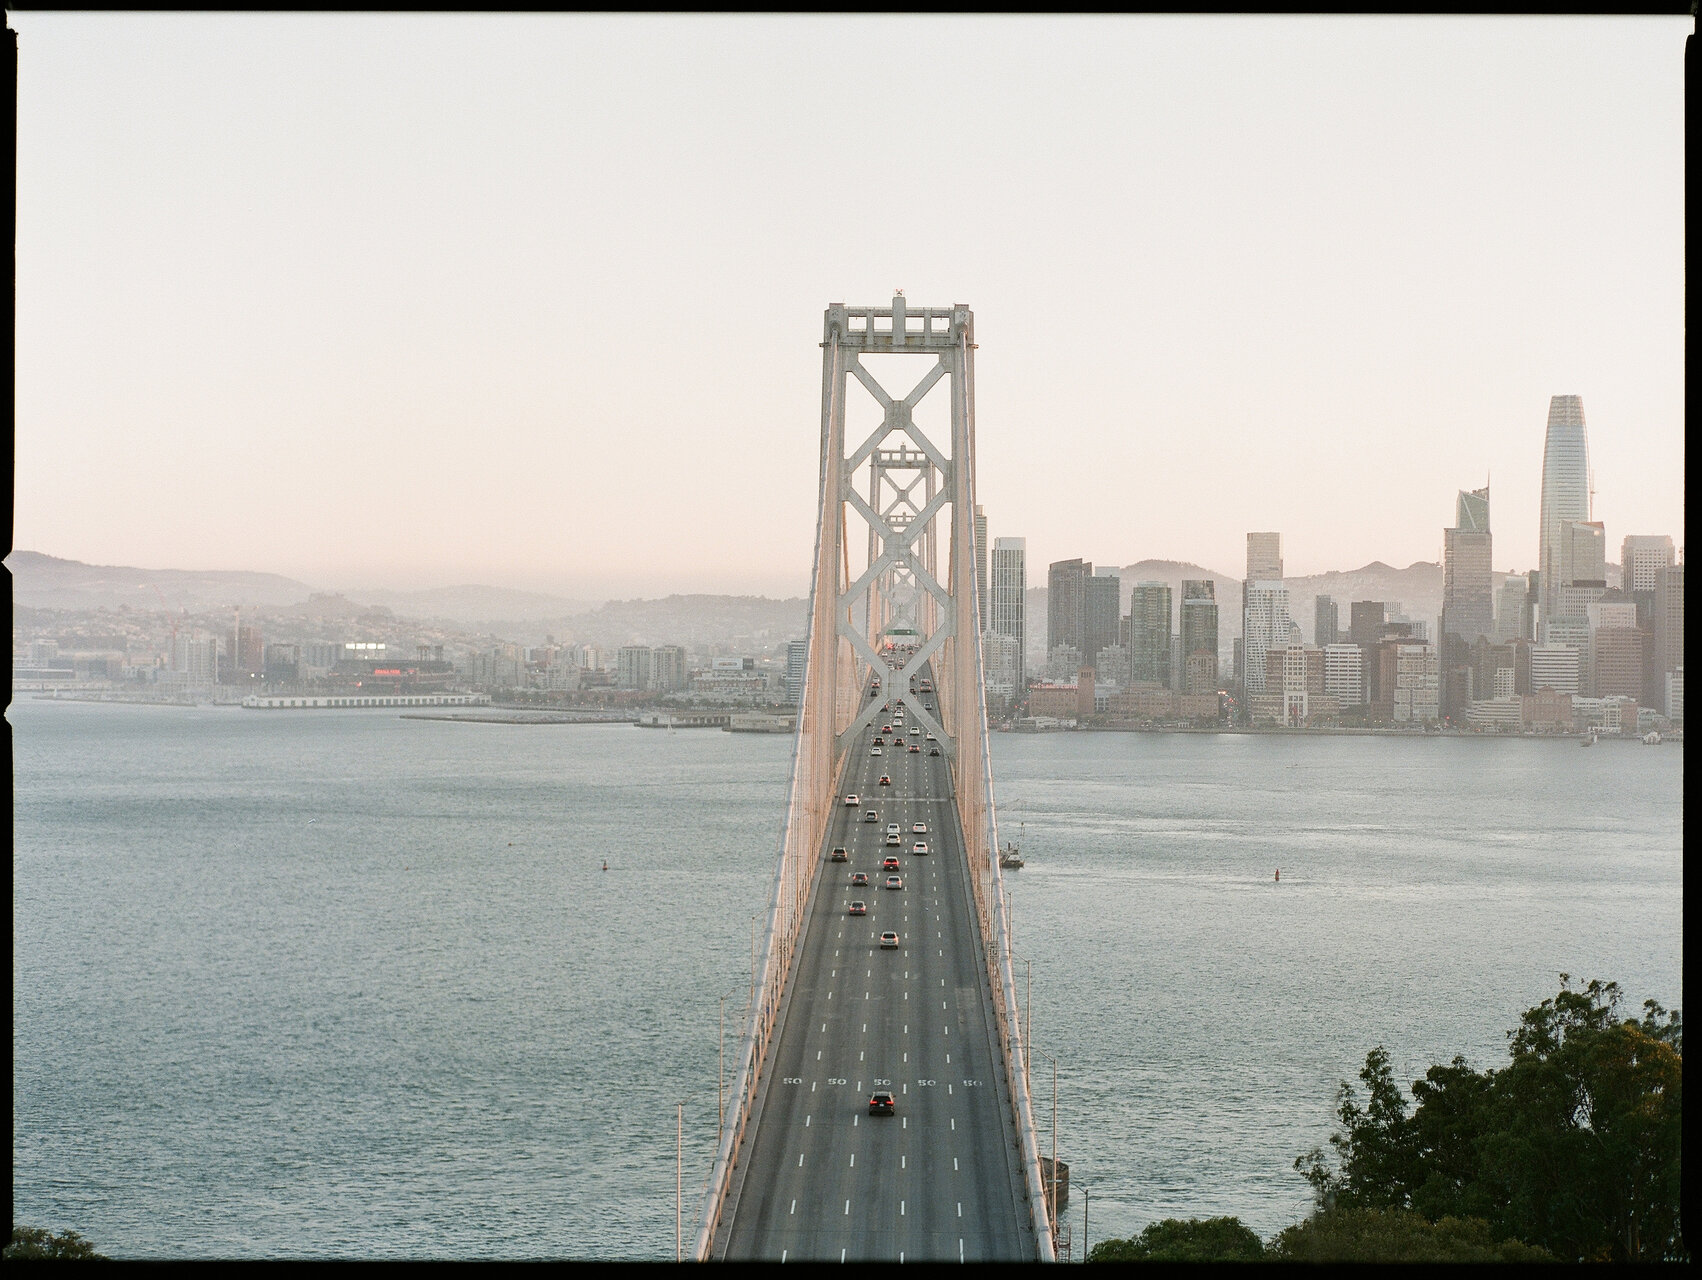 San Francisco Bay Bridge | Author Radostina Boseva - 79ideas | PHOTO FORUM